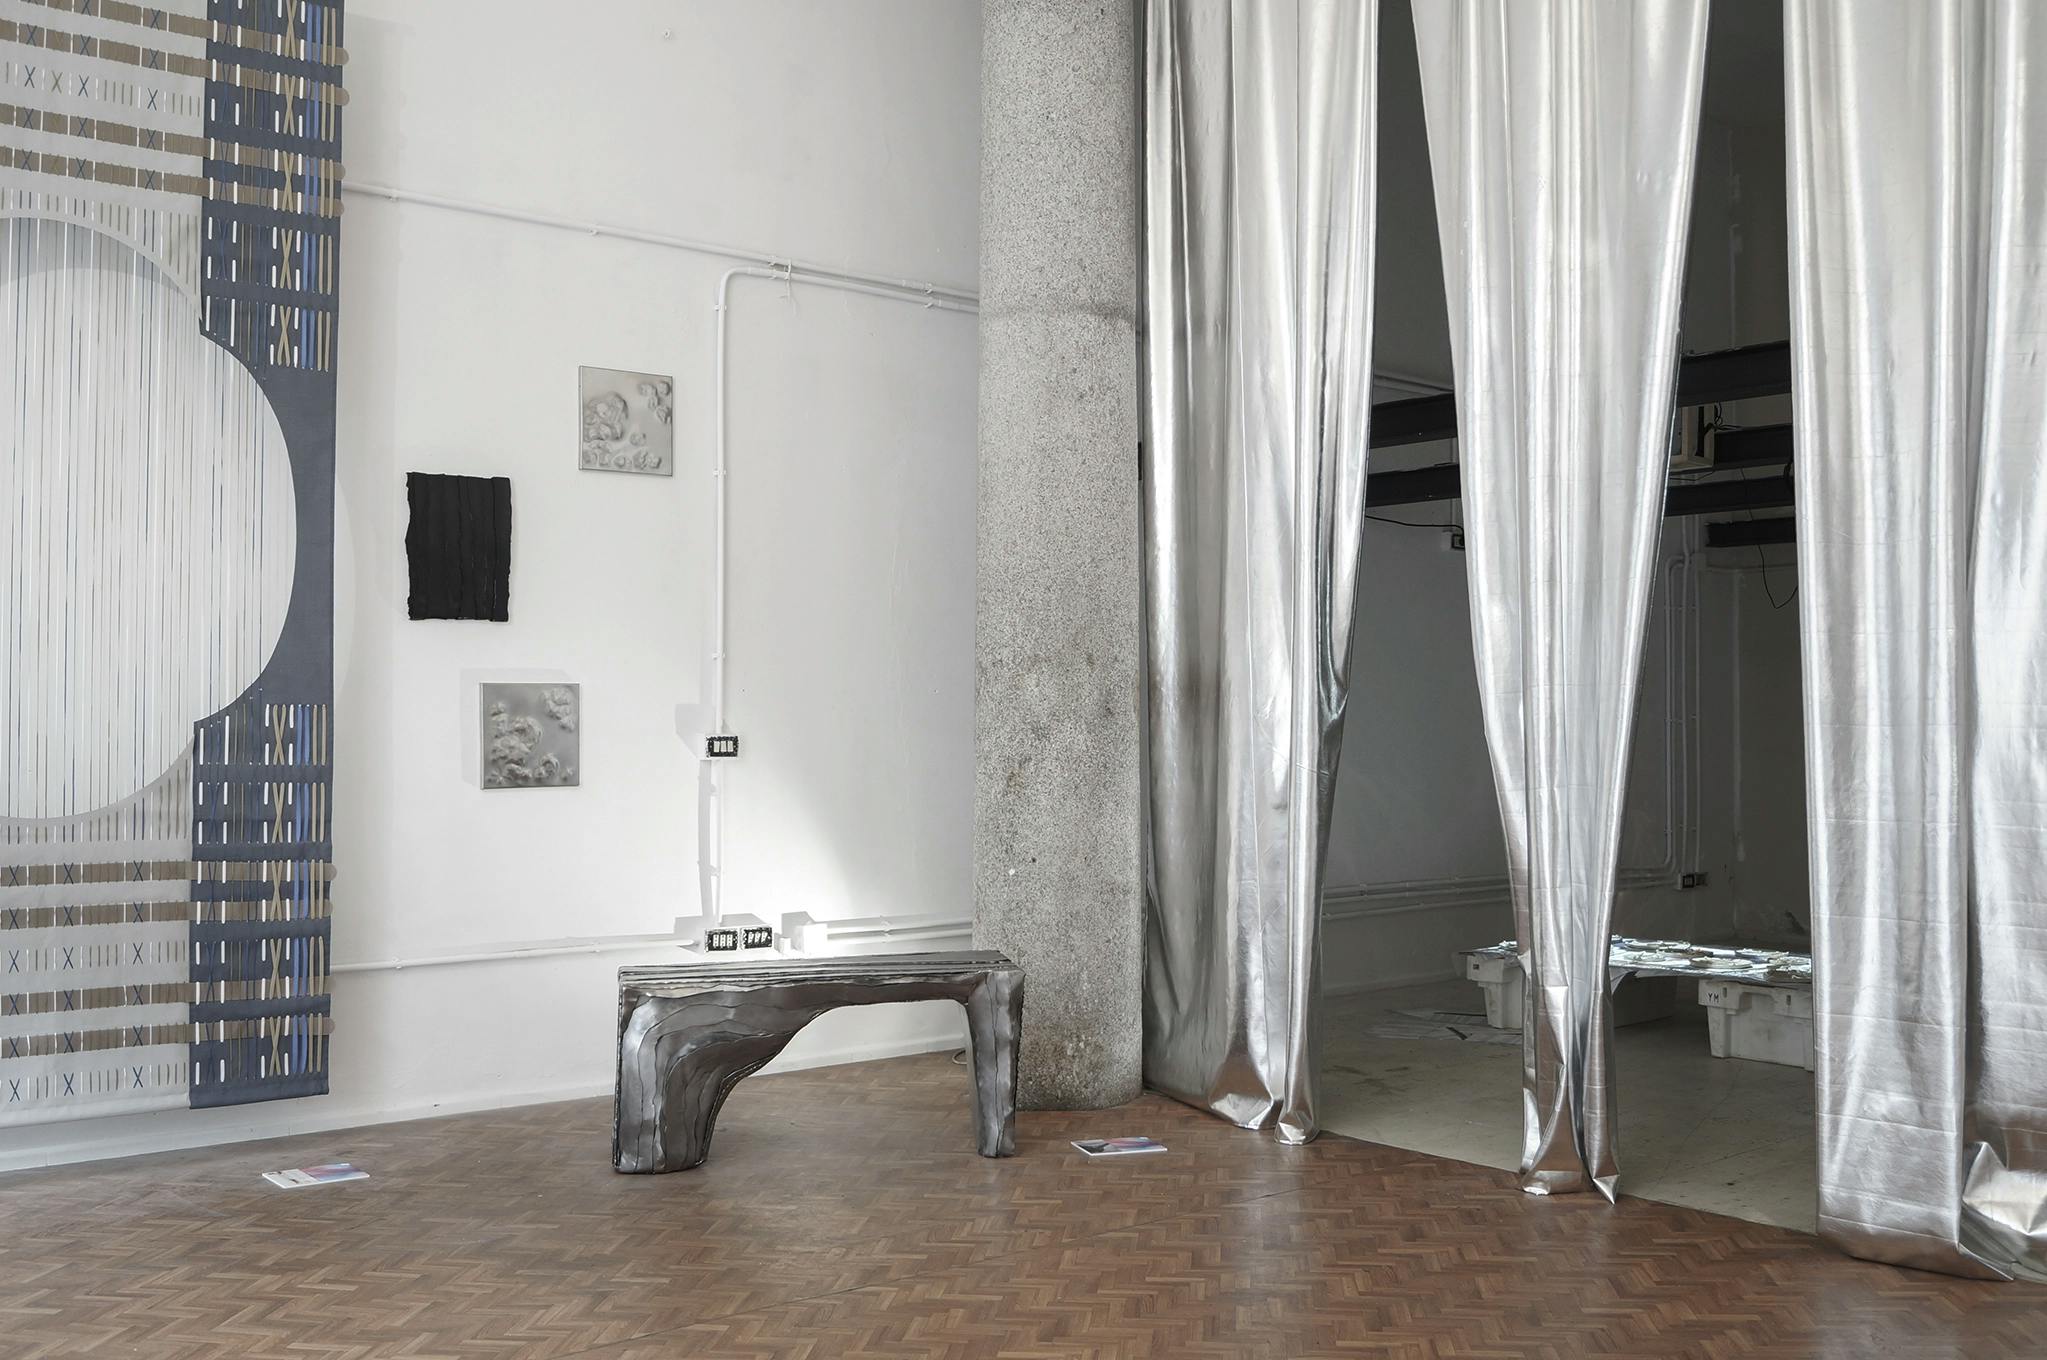 Studio Kloumi's piece, 'Banded Iron Bench' at Milan Design Week